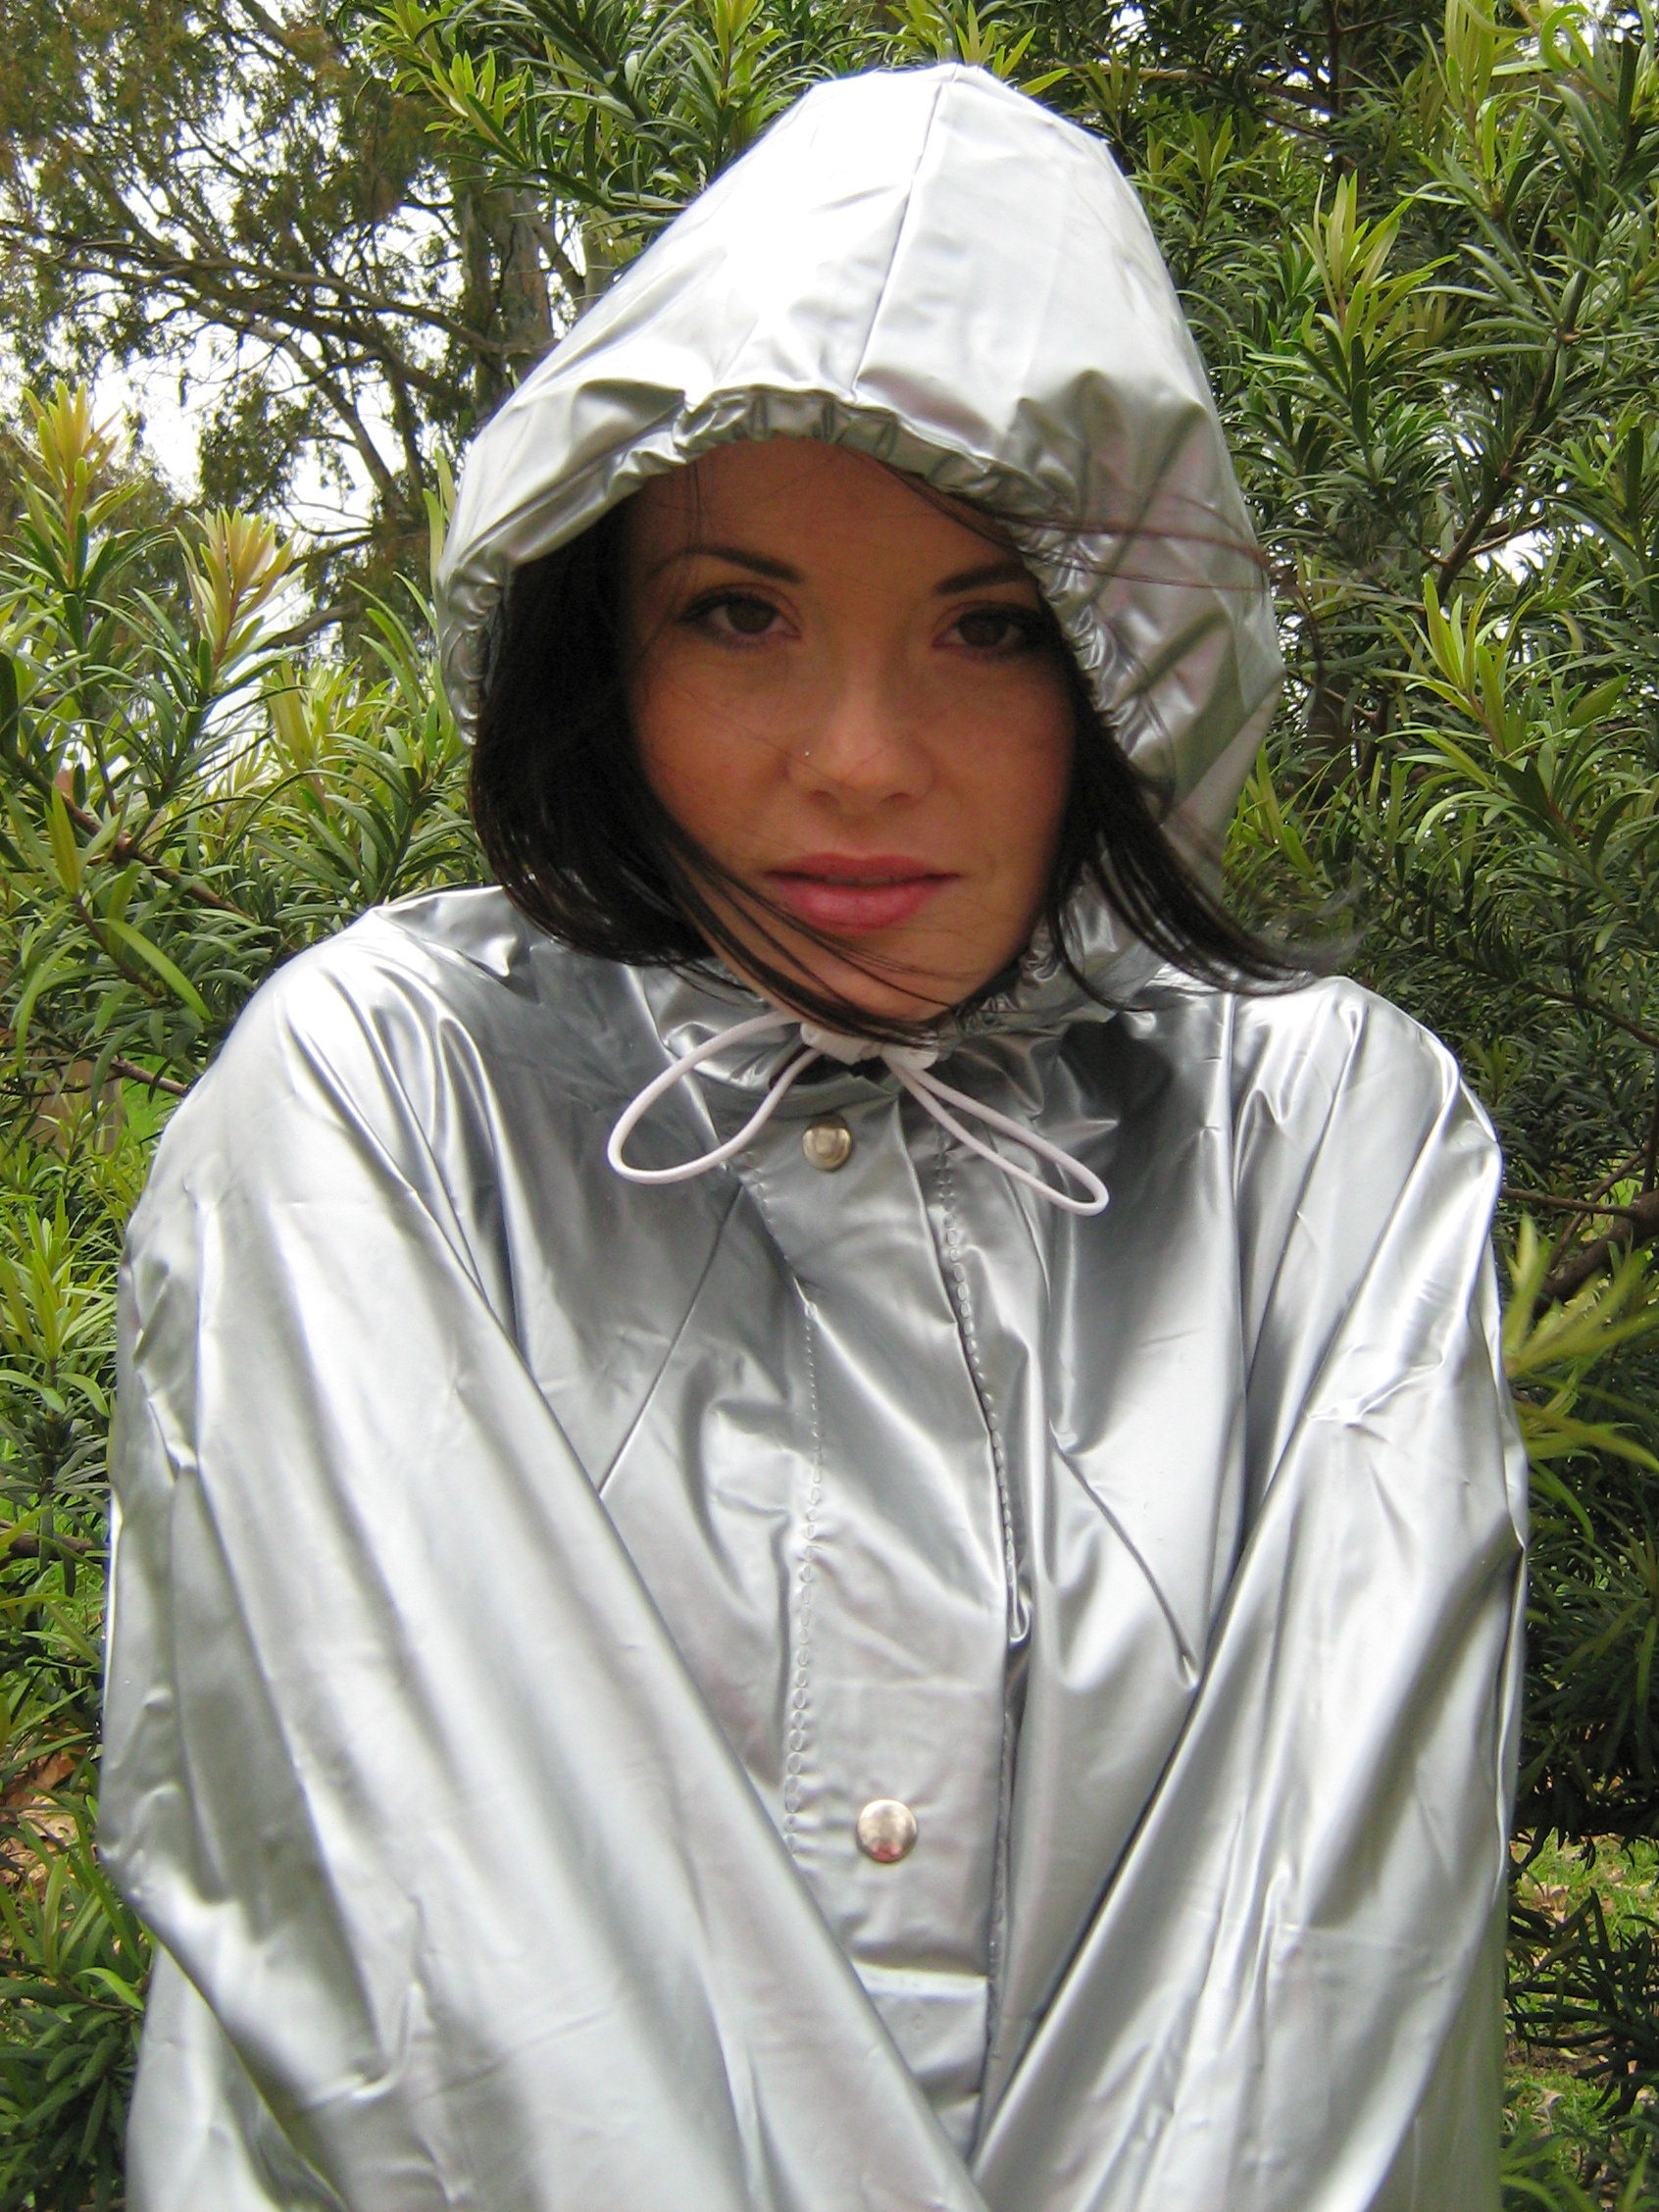 Rainweargirl